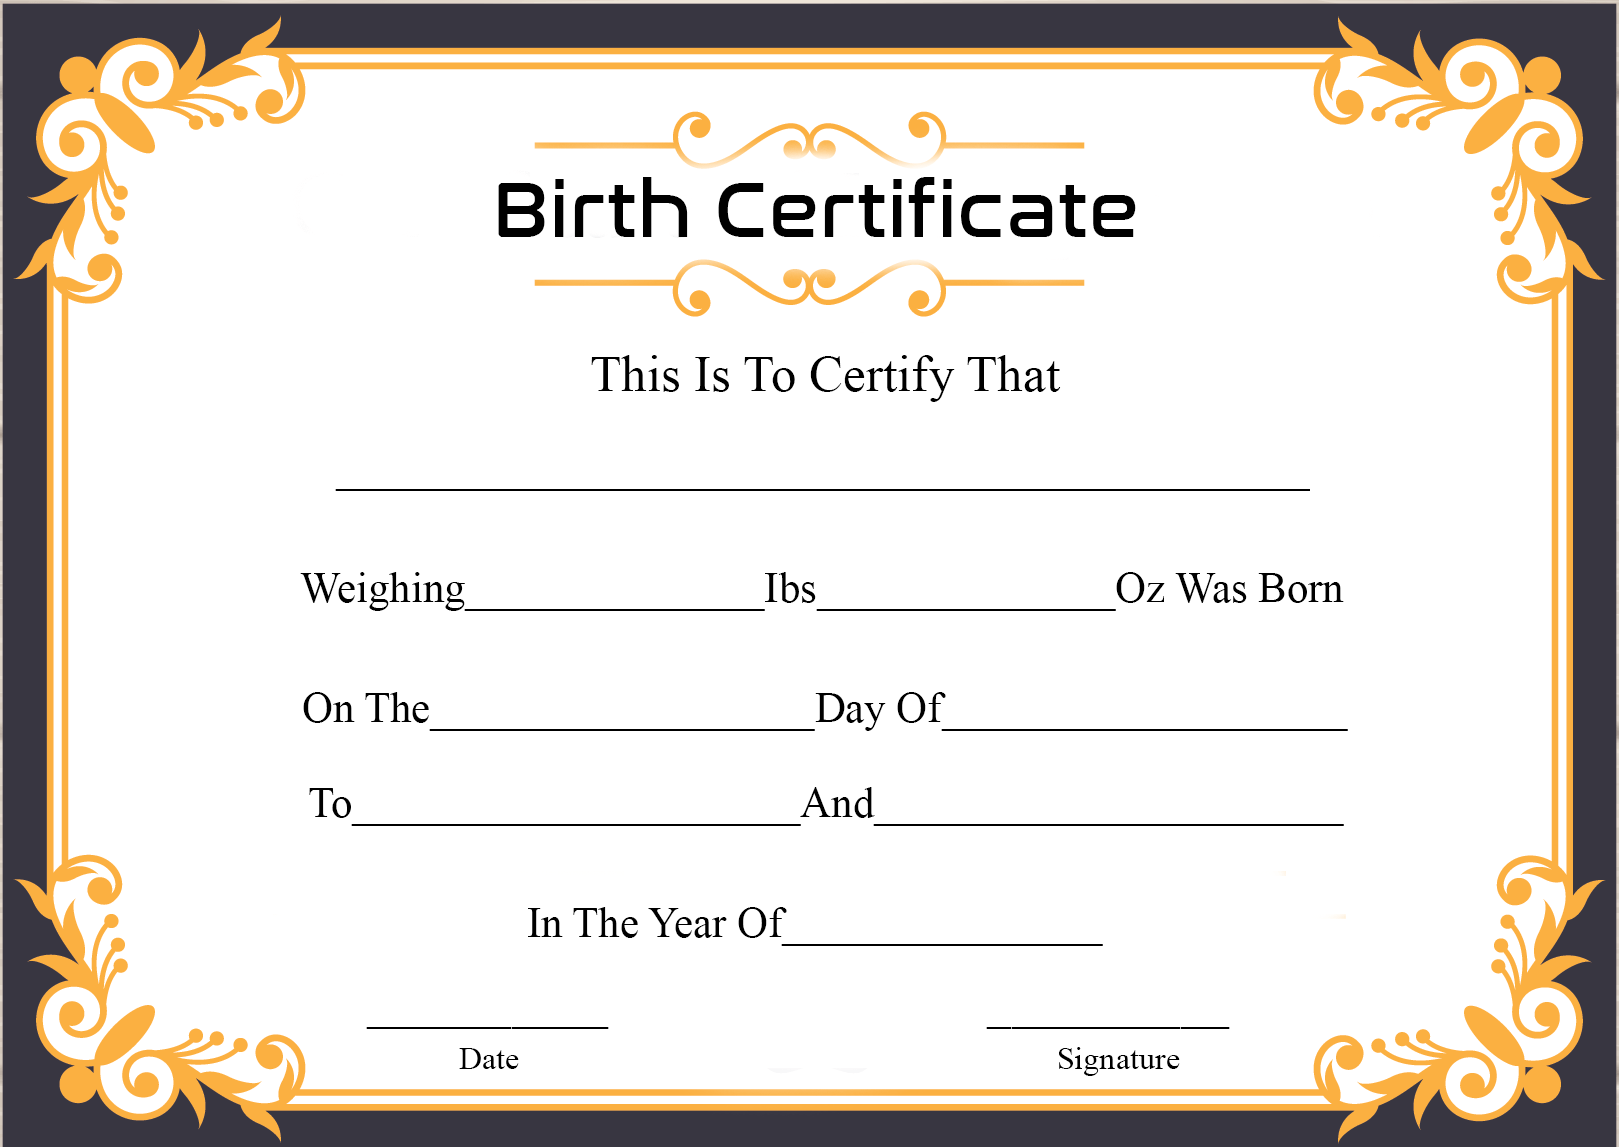 Certificate of Birth Sample